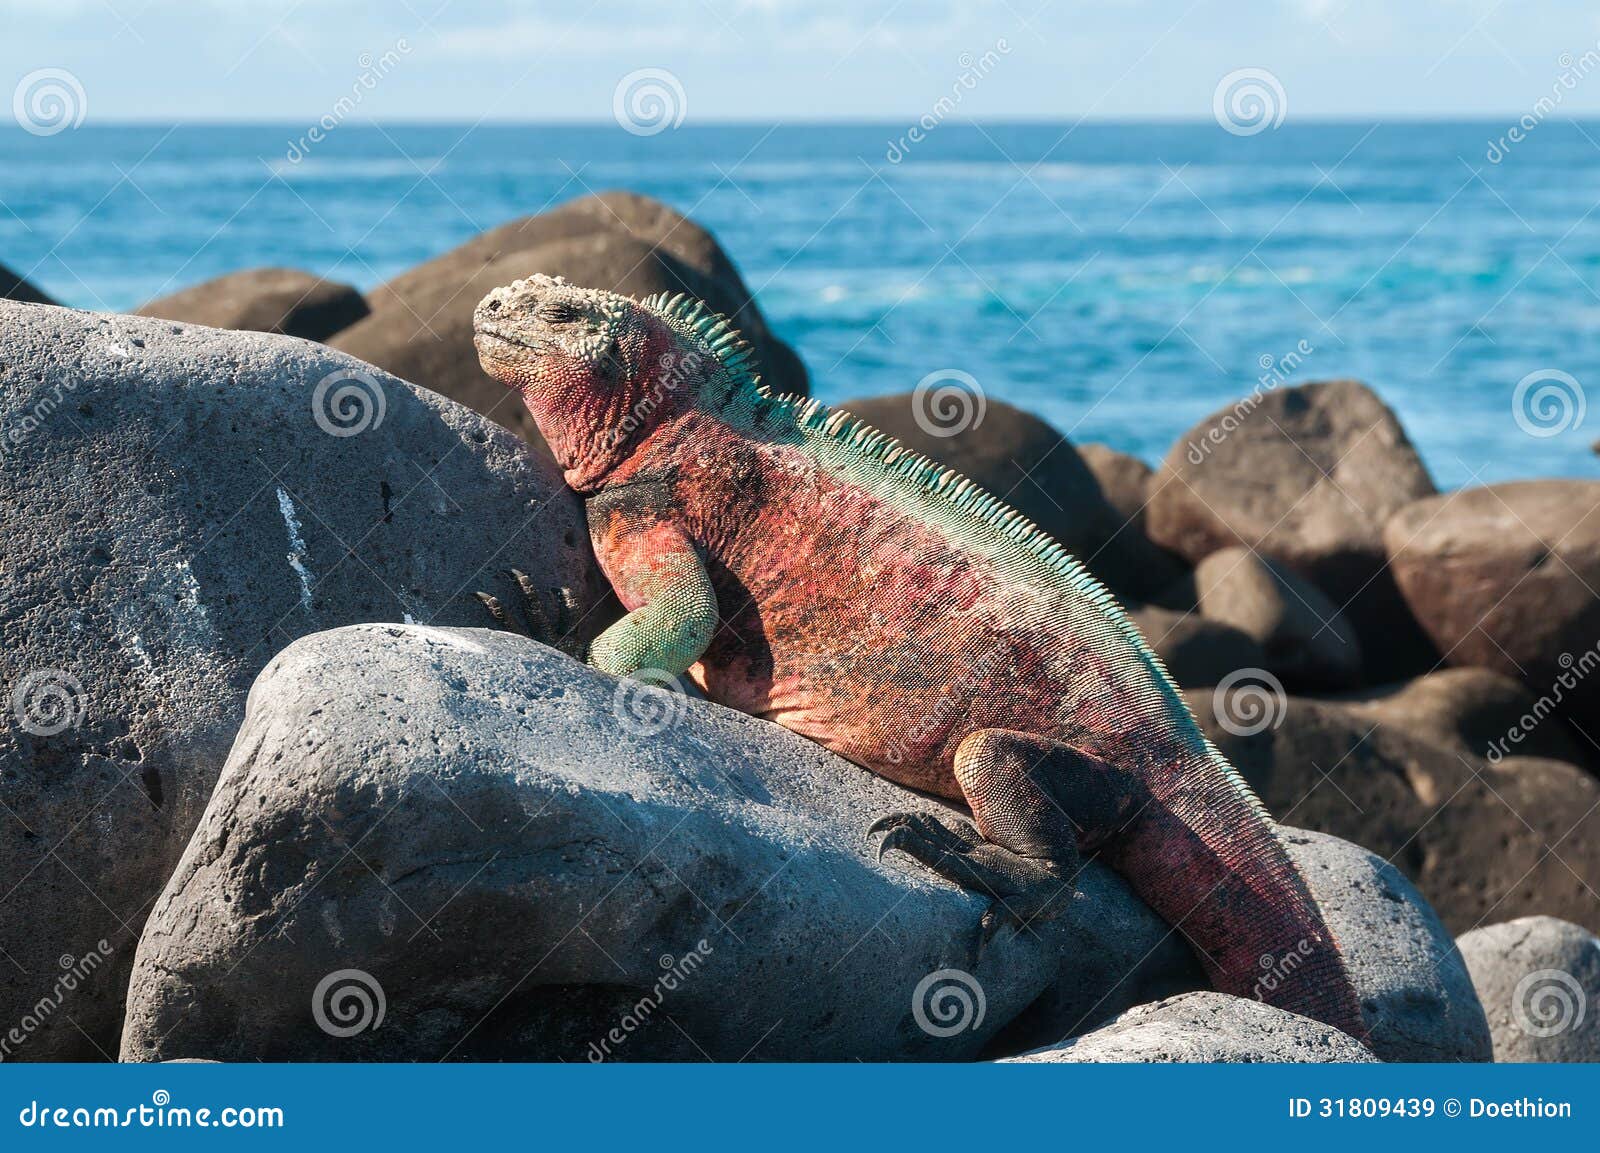 galapagos marine iguana basking in the sun.